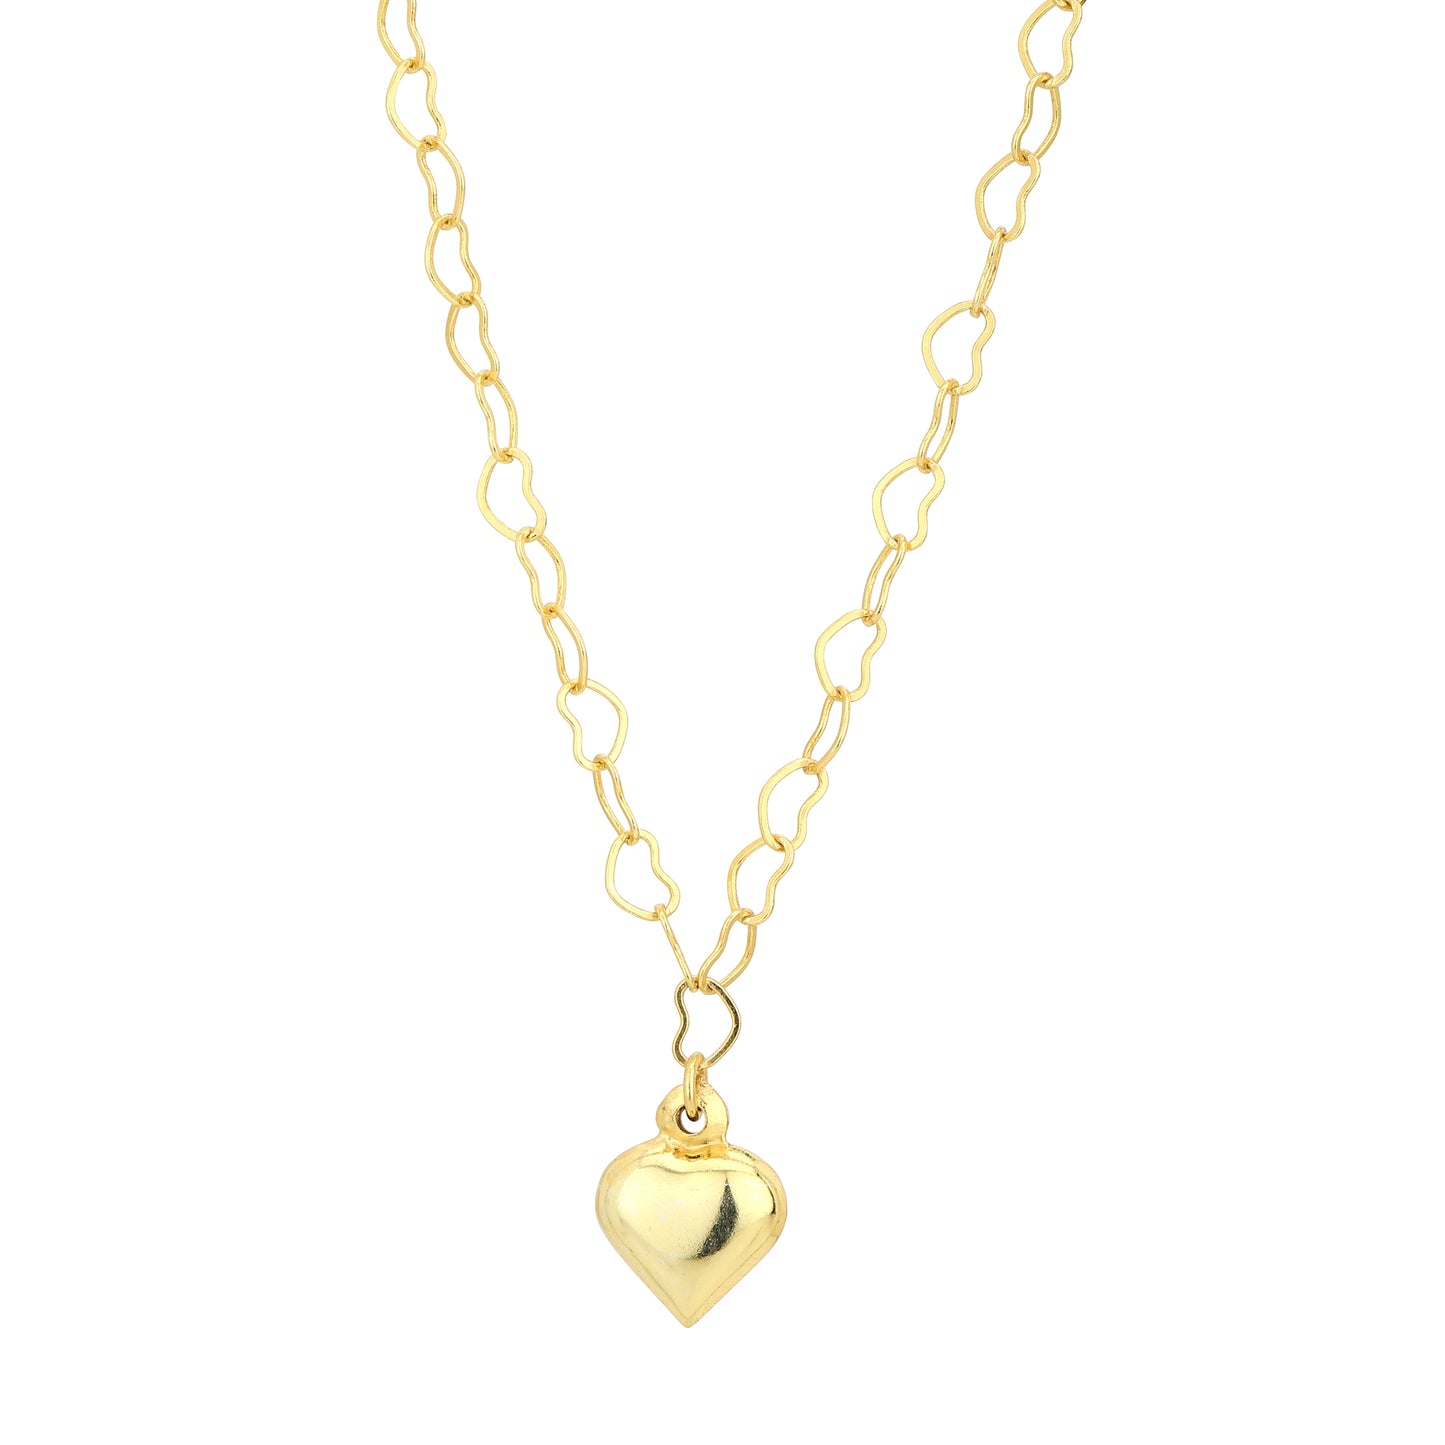 Carlton London Gold Love Heart Charm Pendant Necklace